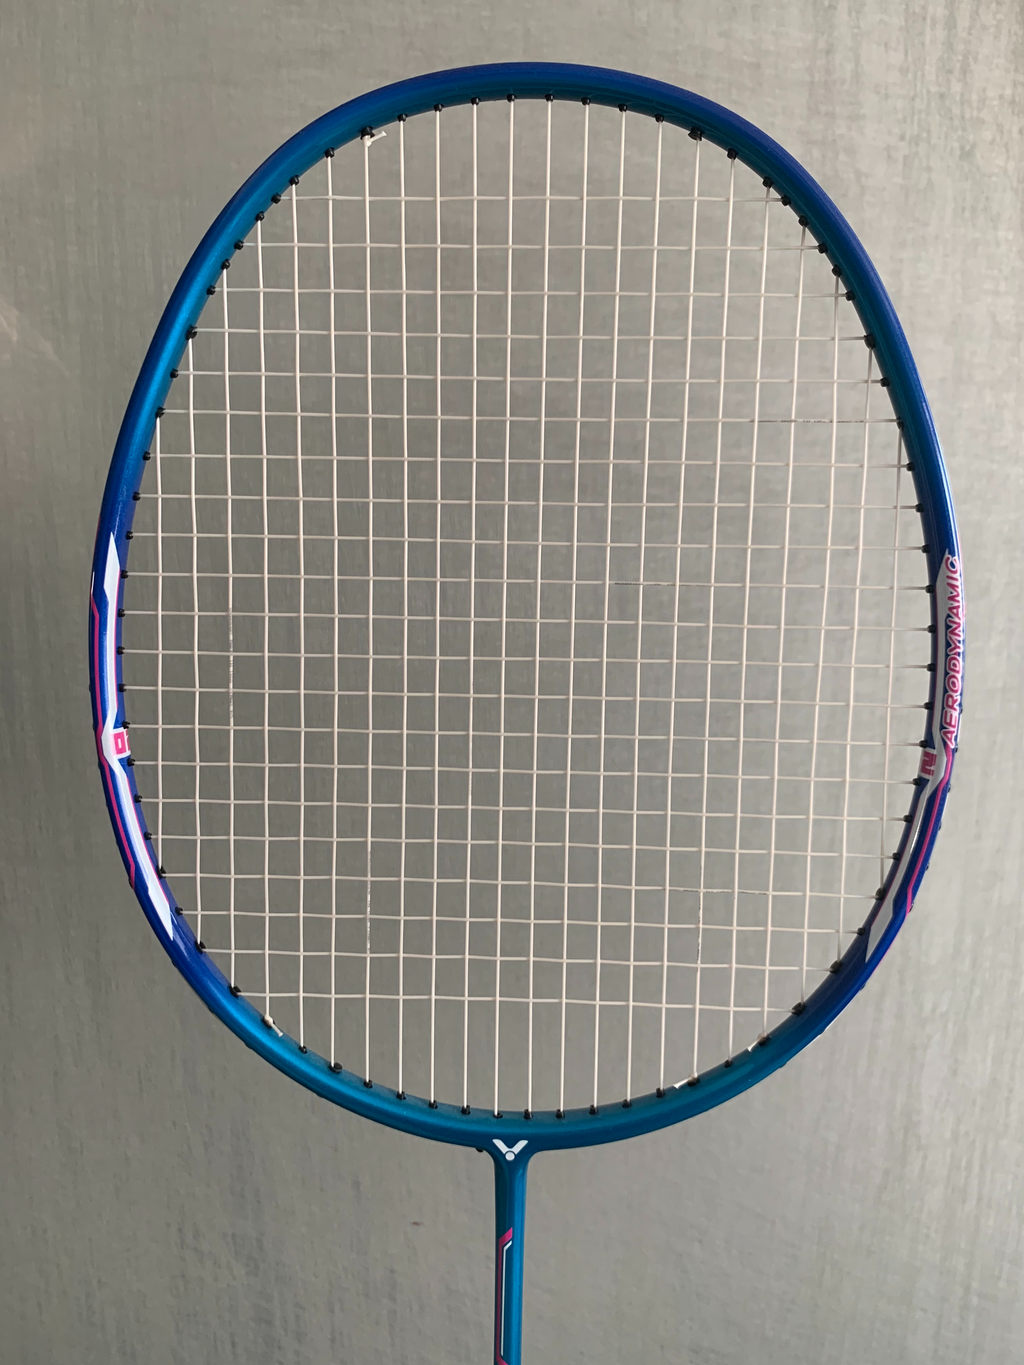 Victor Jetspeed S 02  Badminton Racket - badminton racket review